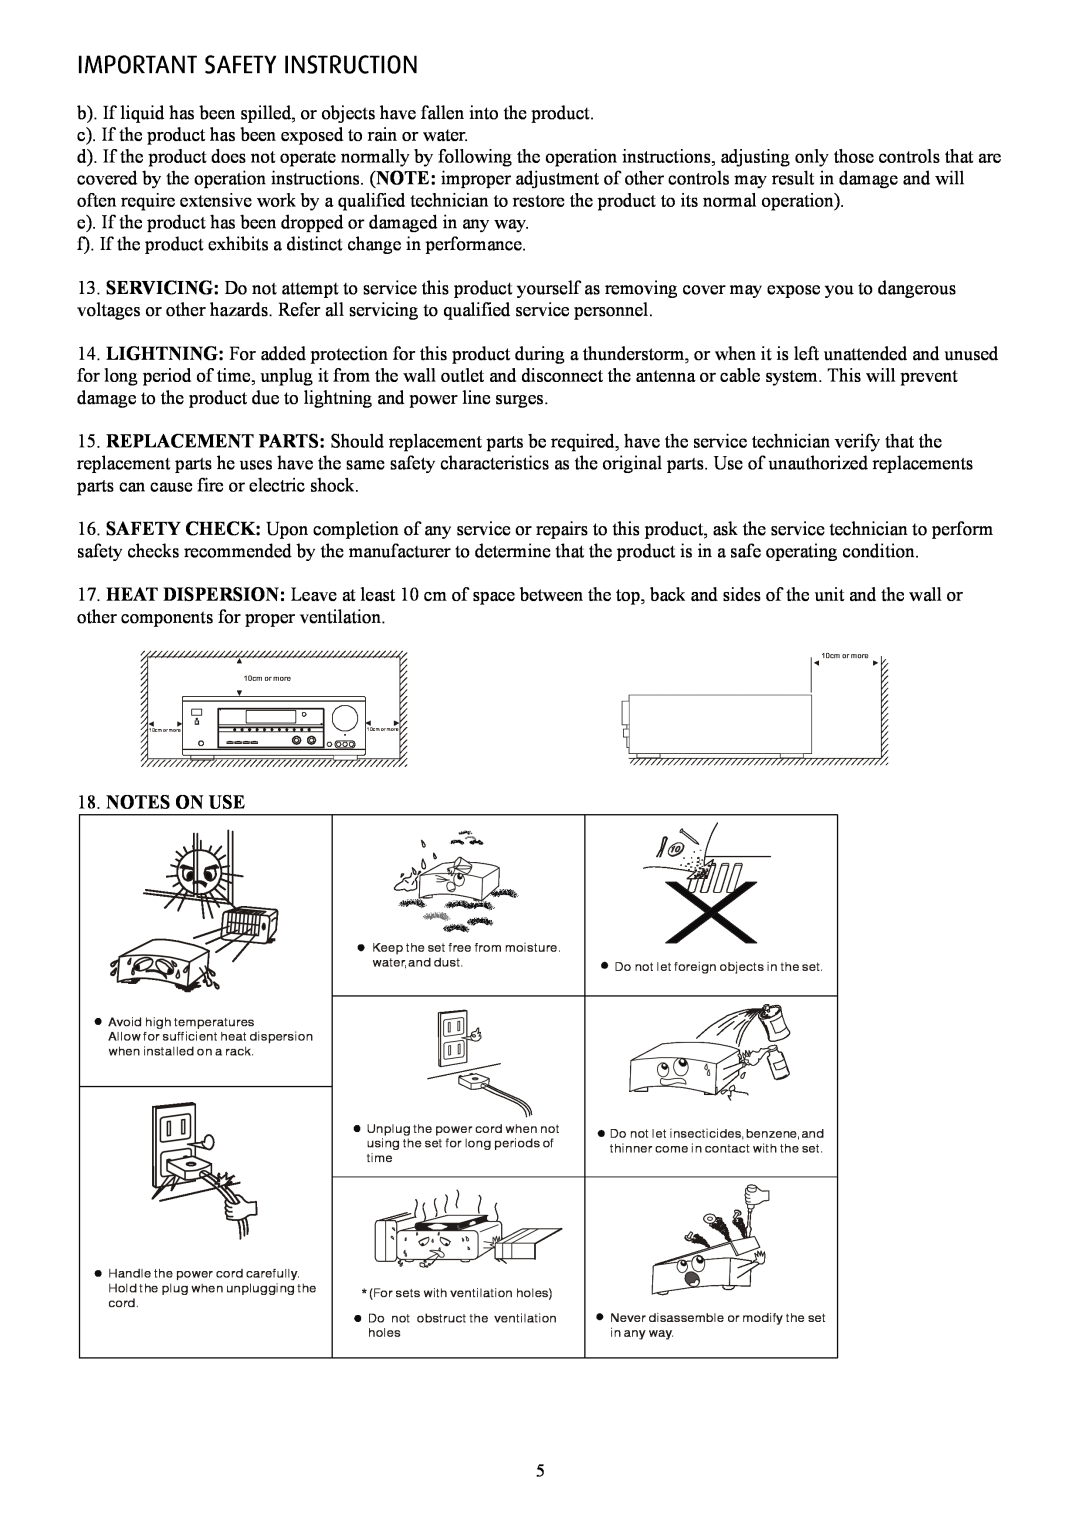 Eltax AVR-900 instruction manual Notes On Use, Important Safety Instruction 